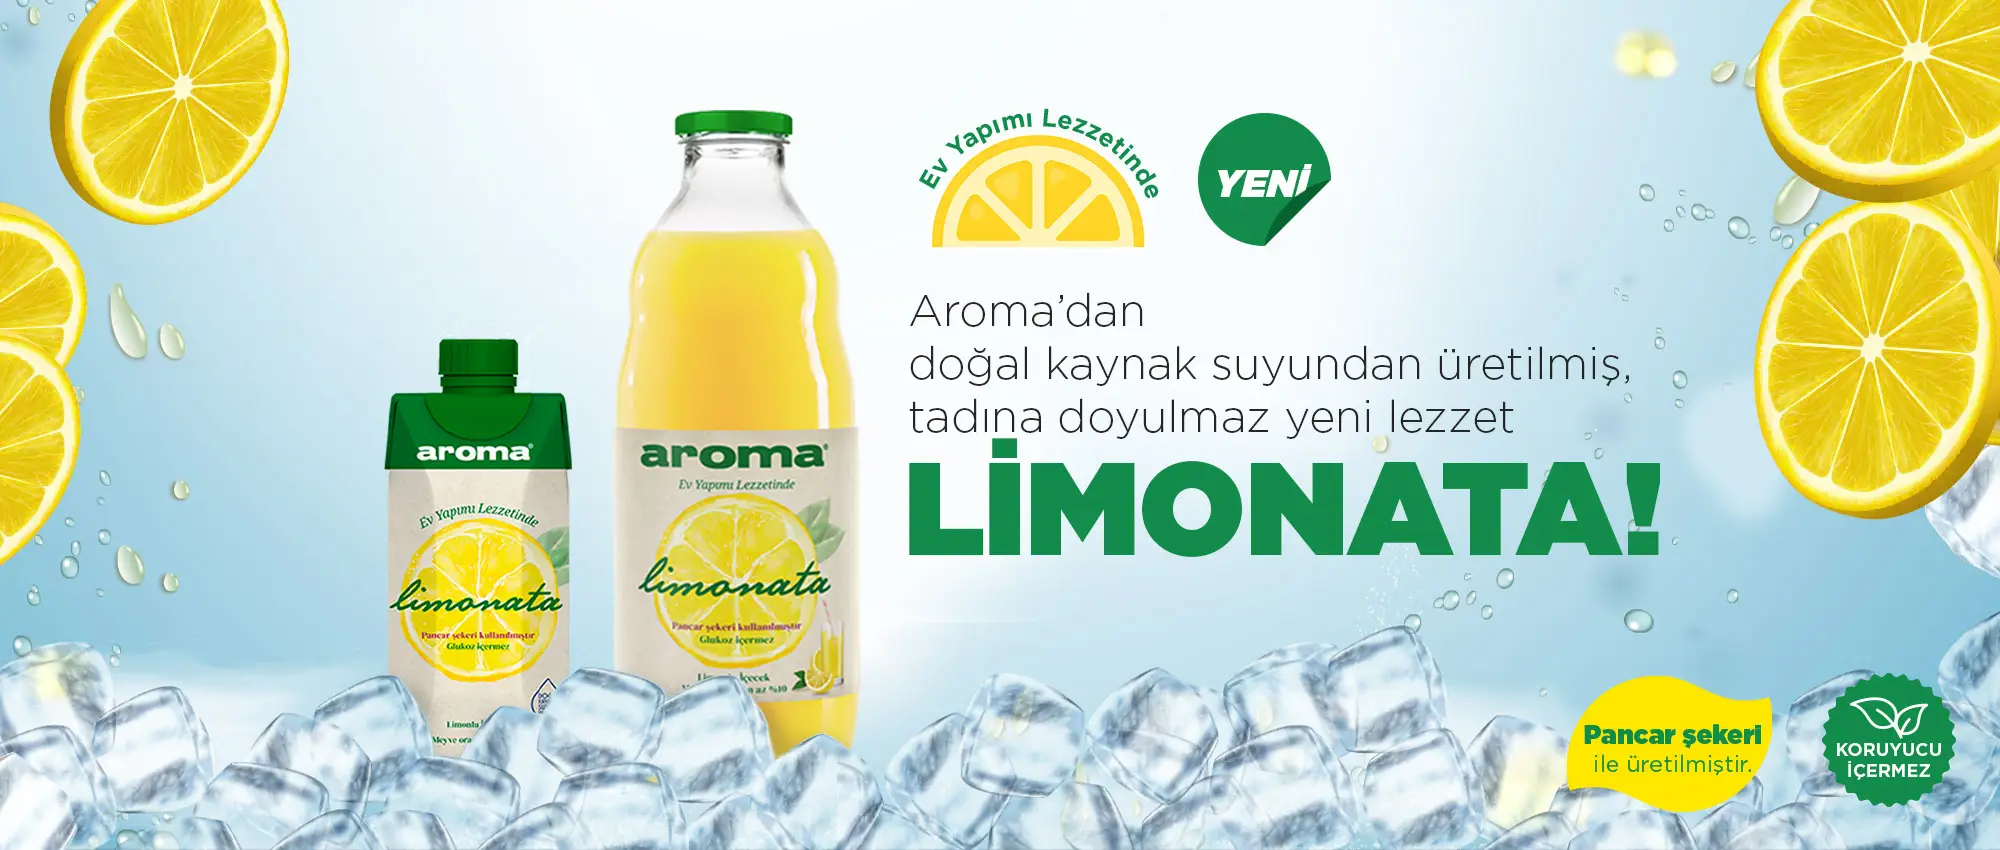 aroma-slider-limonata